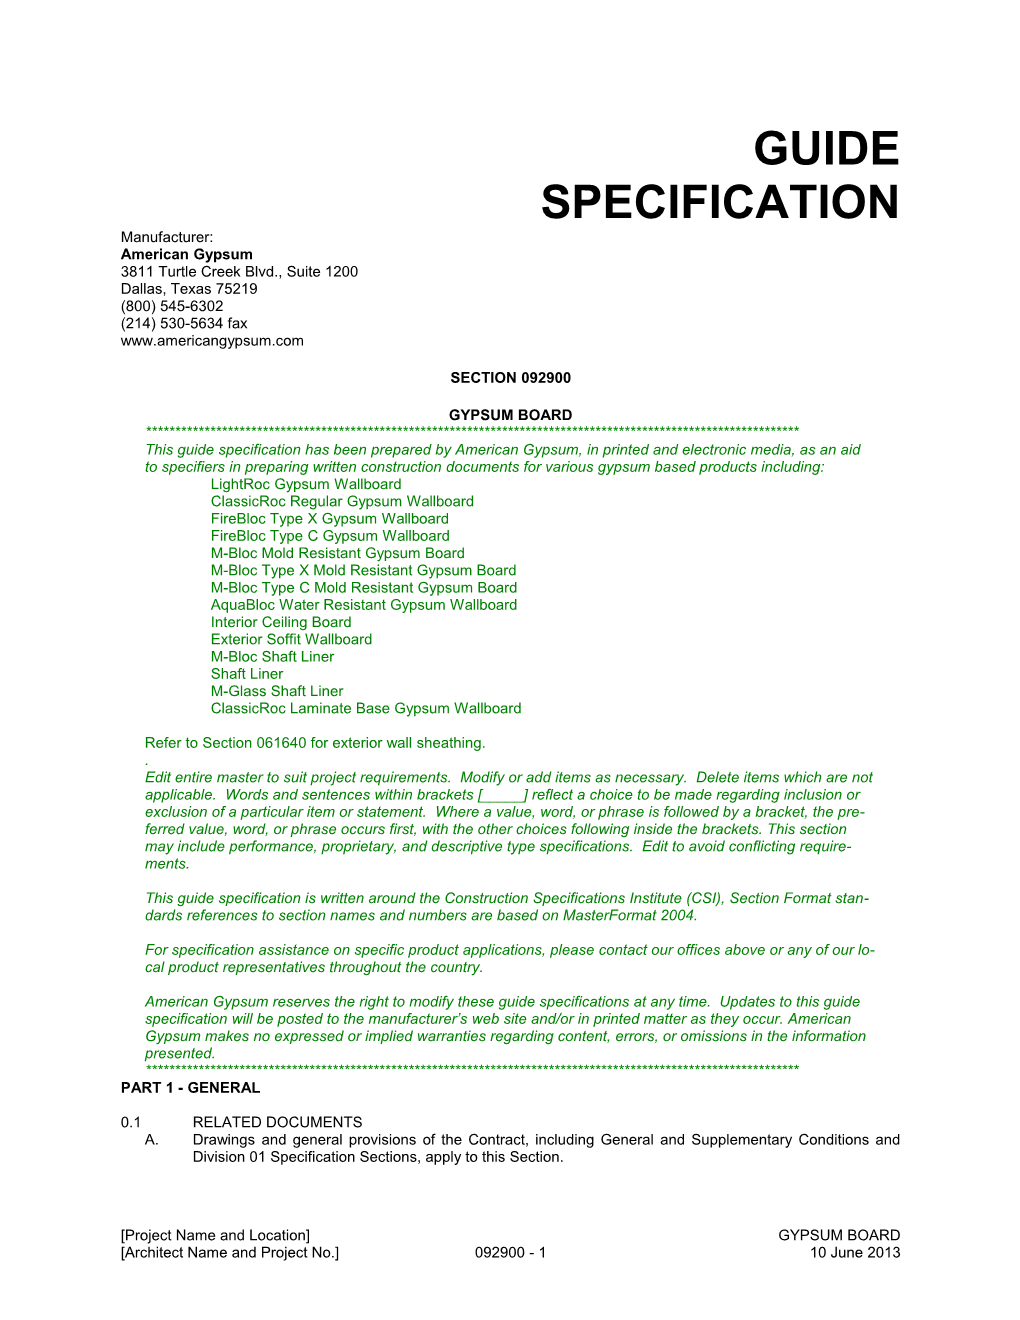 Section 092900 - Gypsum Board